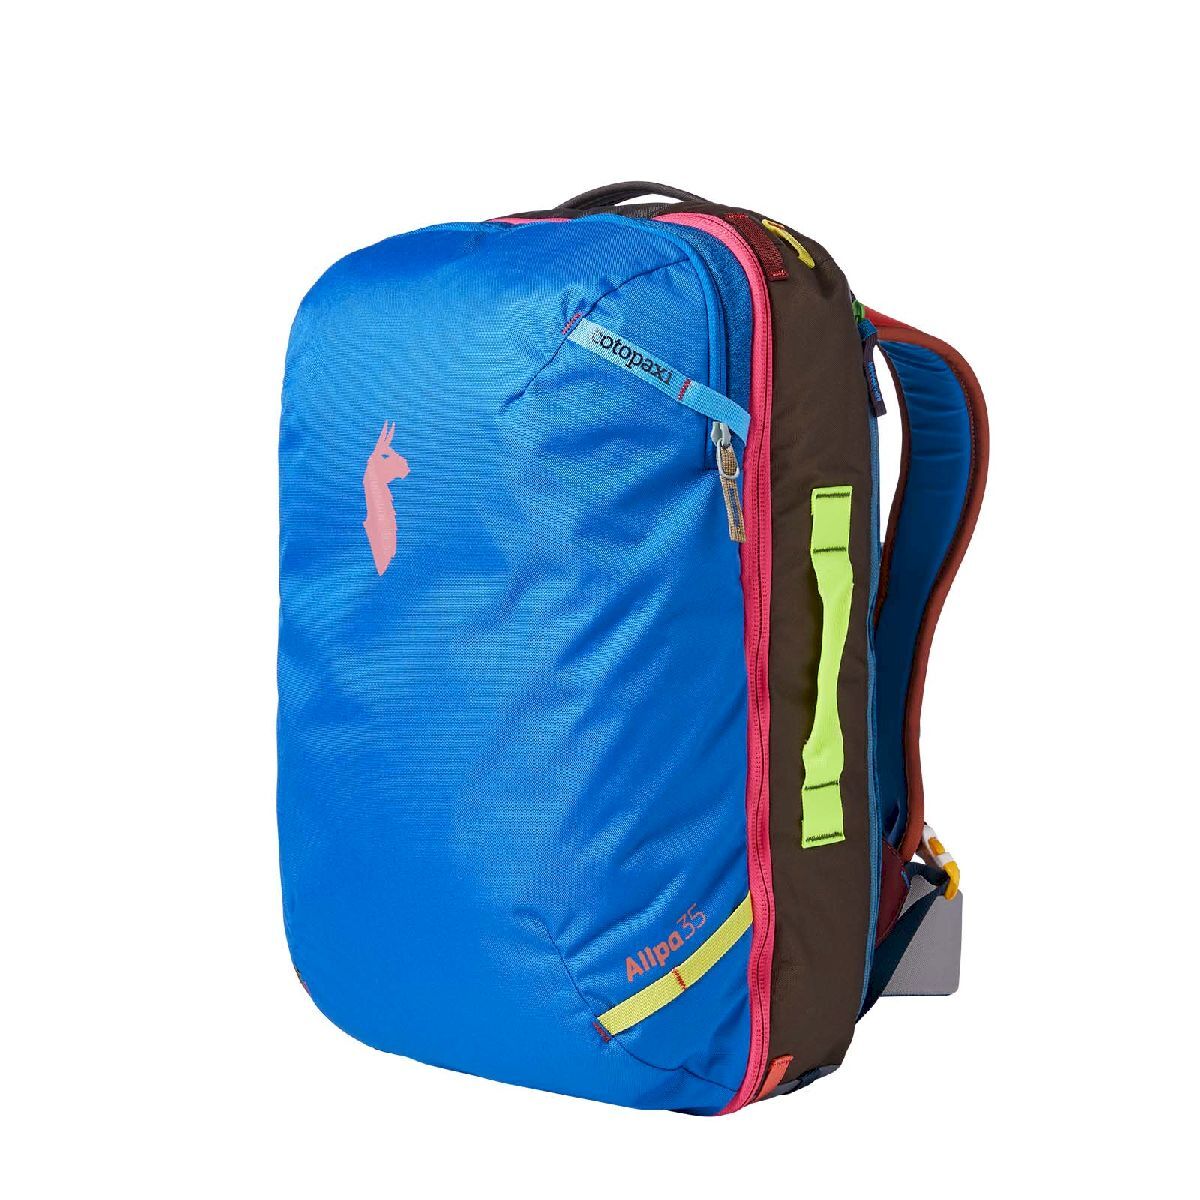 Cotopaxi Allpa 35L Travel Pack - Plecak turystyczny | Hardloop